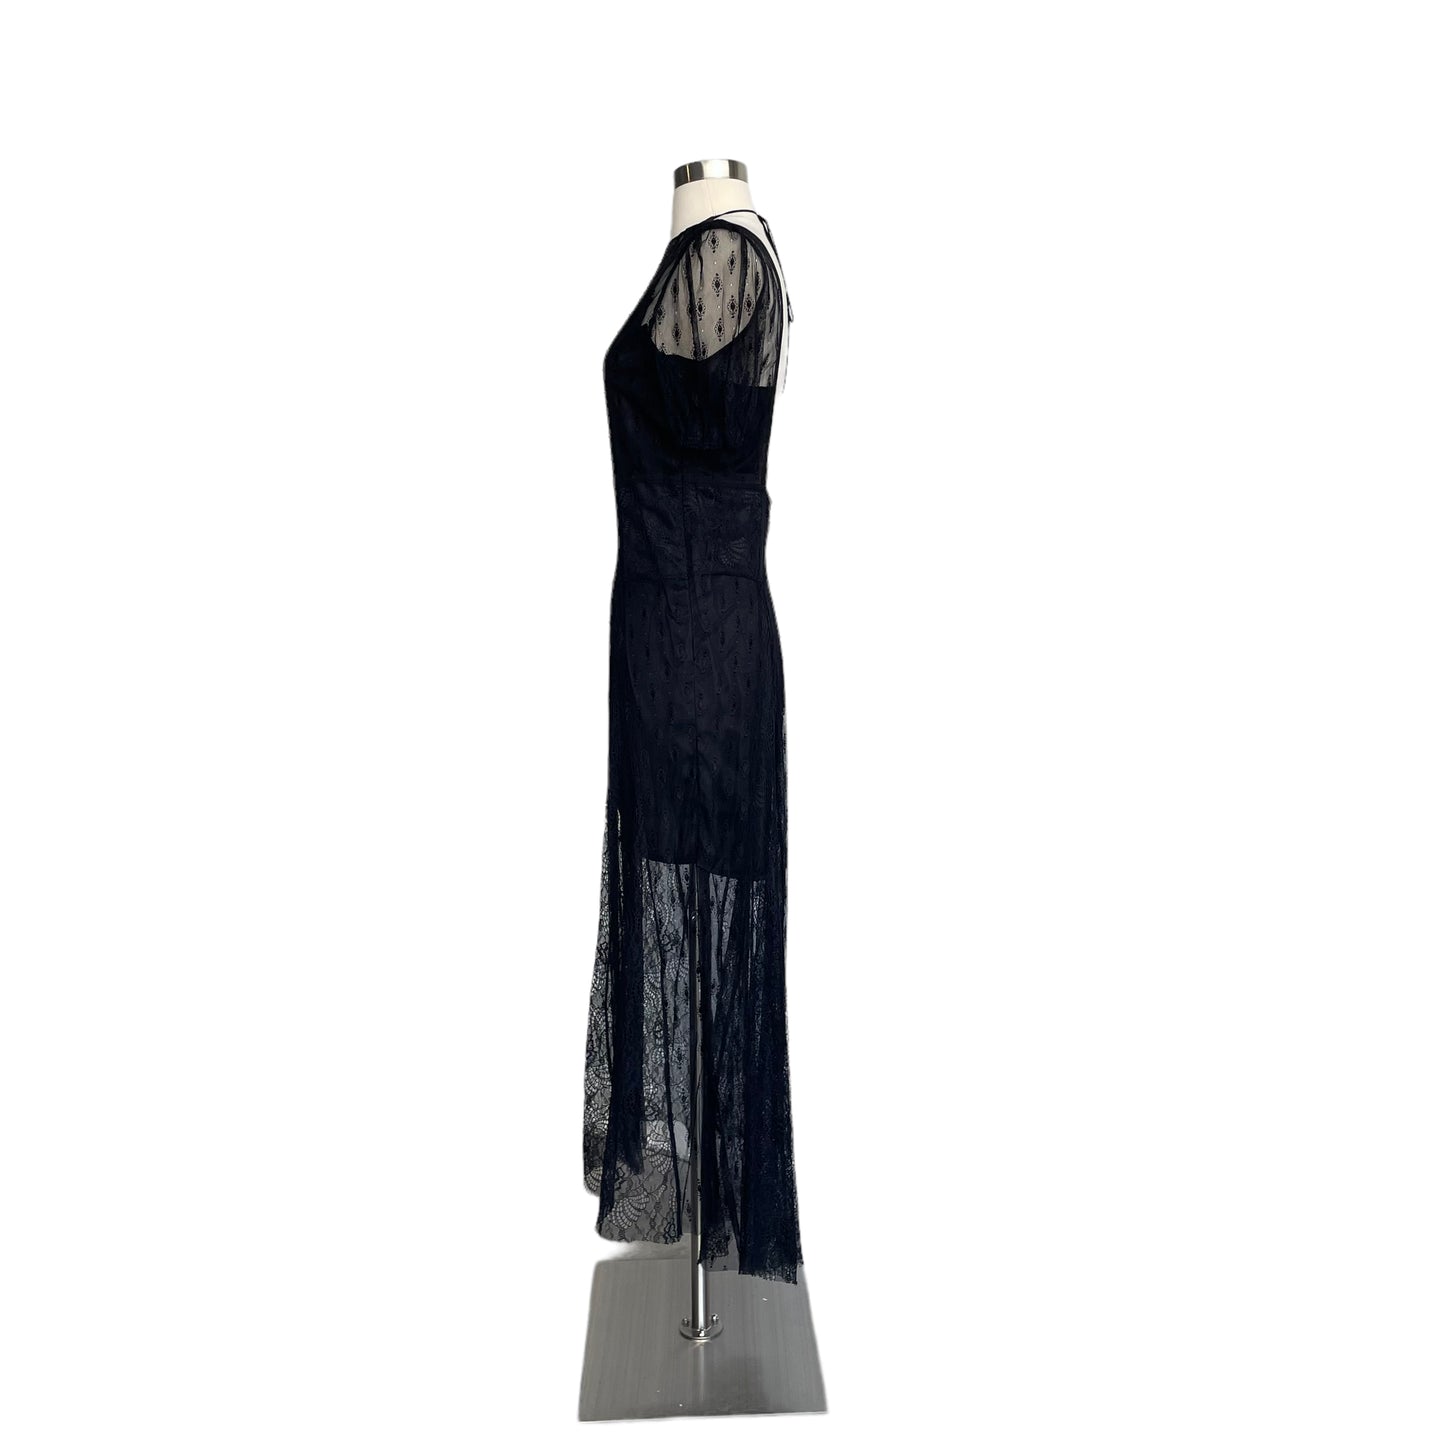 Black Sheer Lace Dress - S